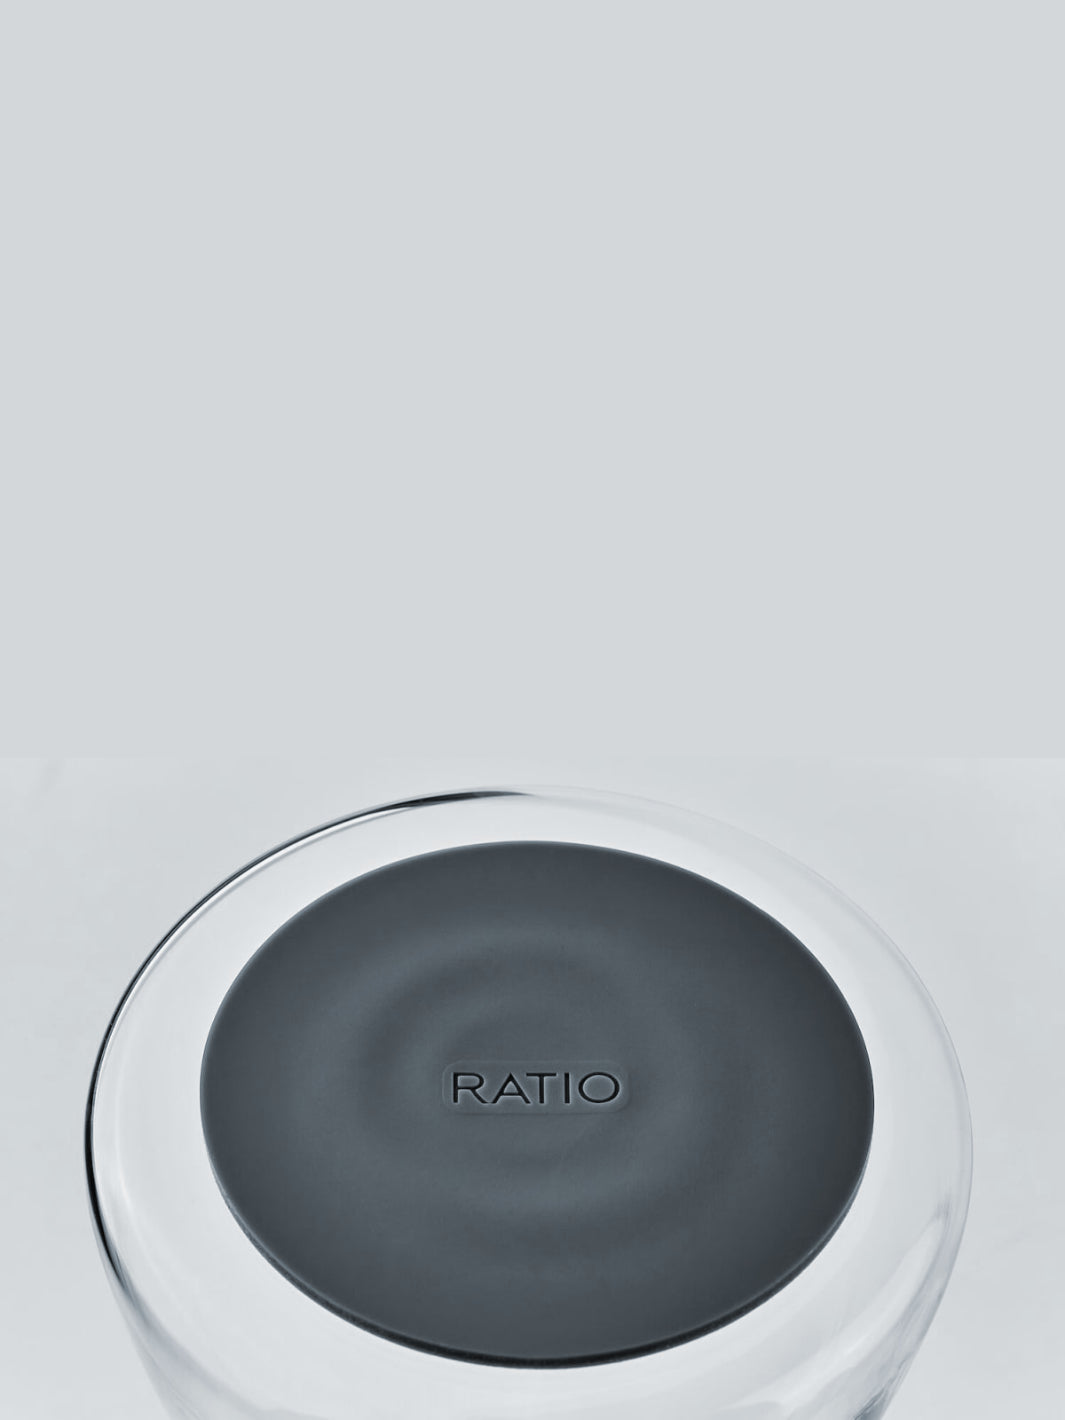 Ratio Glass Carafe – Able